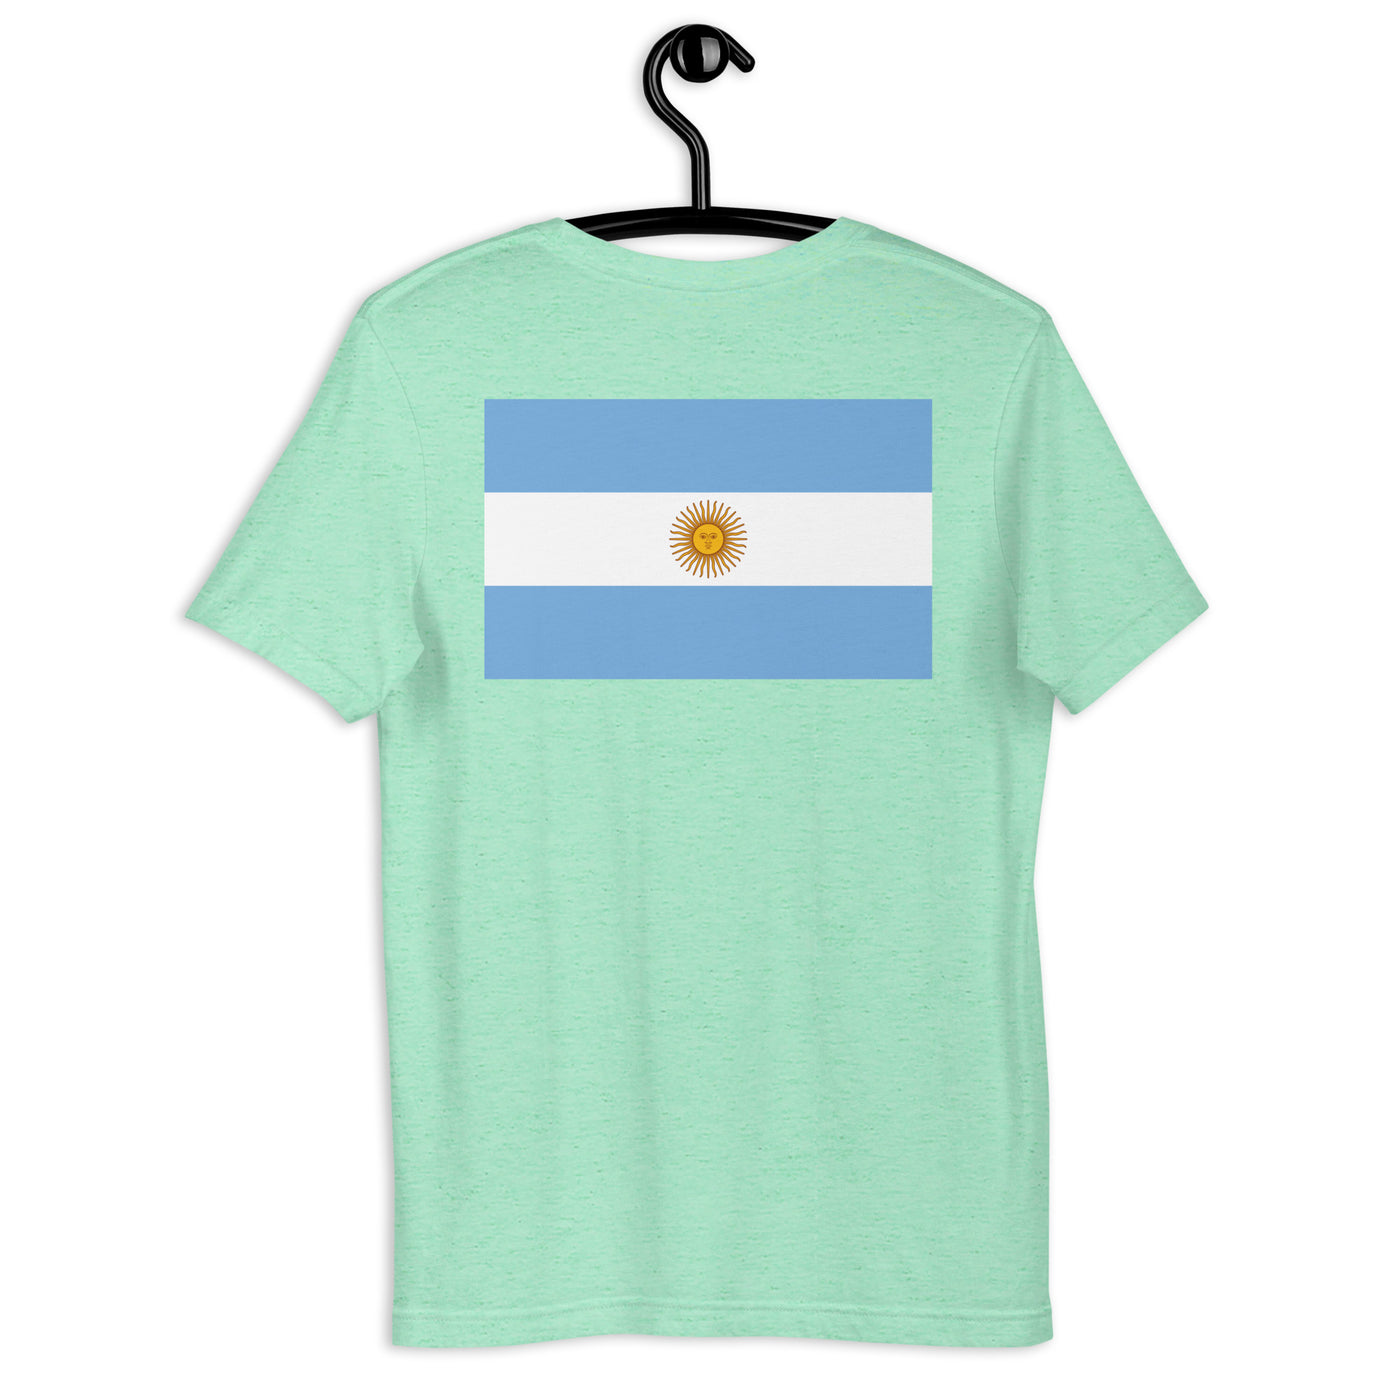 POR VIDA (Argentina-Black Text) Unisex t-shirt